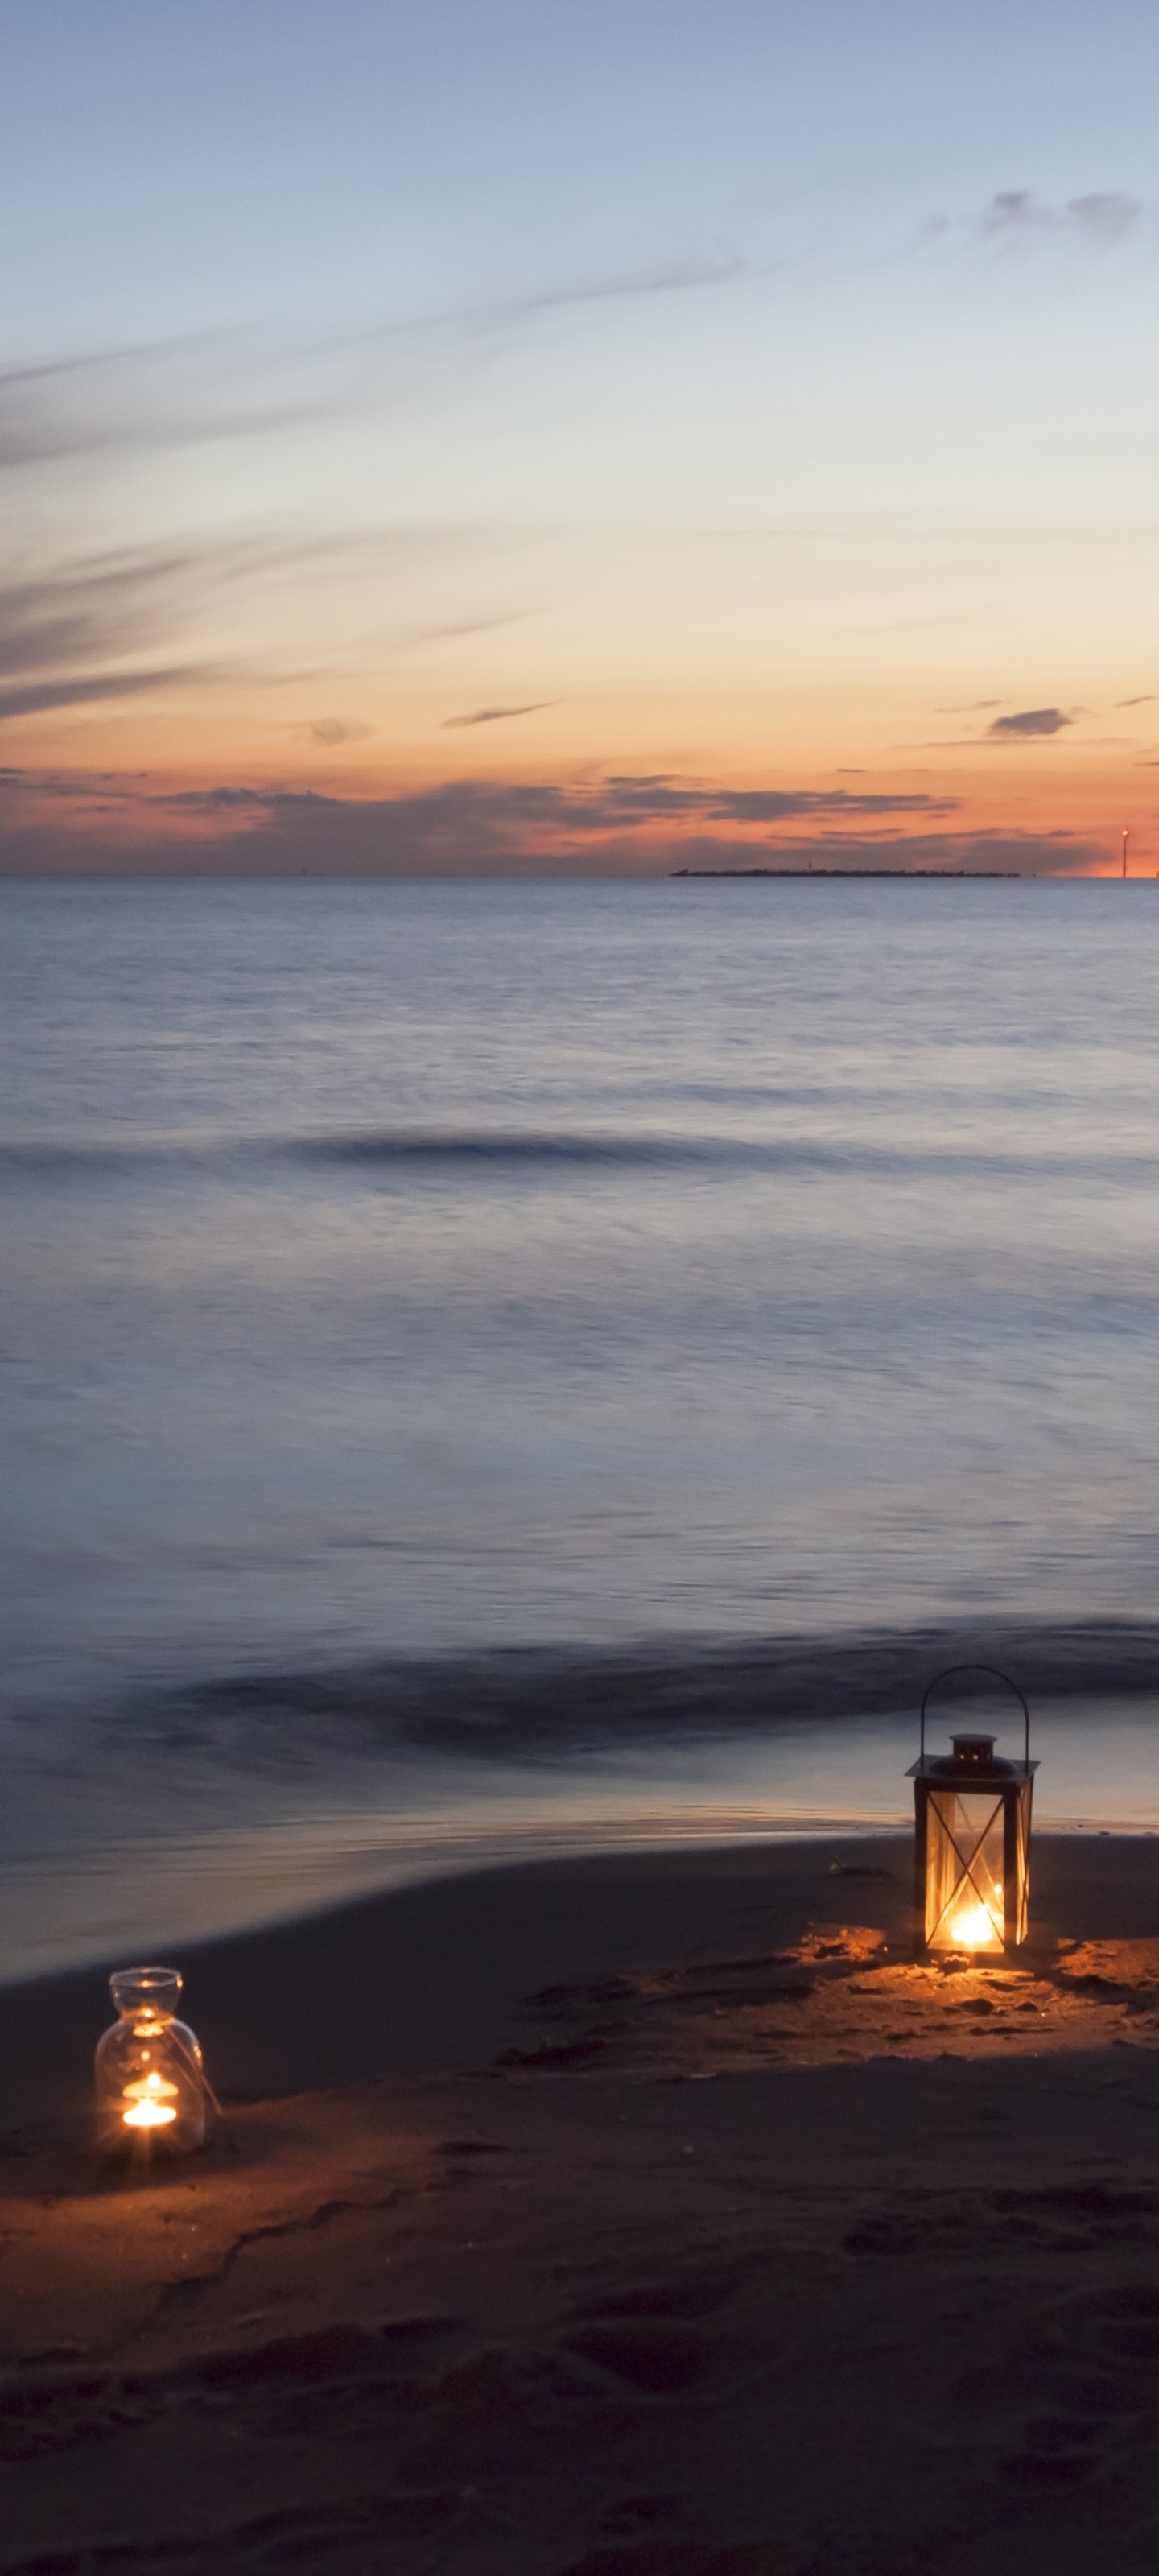 Lanterns on a deserted beach at sunset by LTapsaH